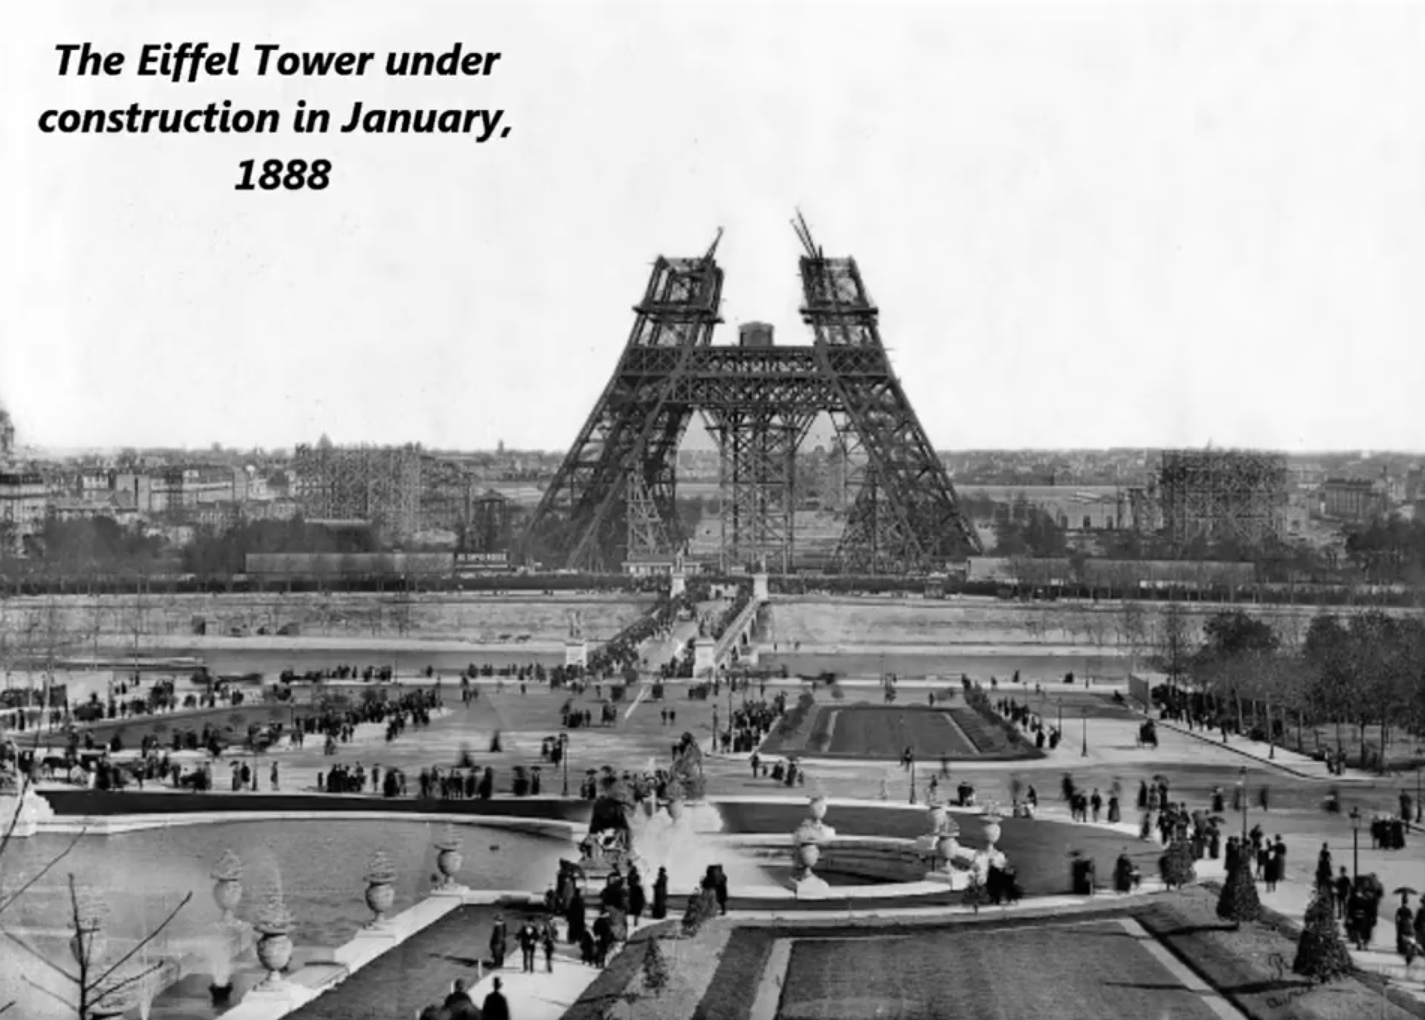 destroyed eiffel tower - The Eiffel Tower under construction in